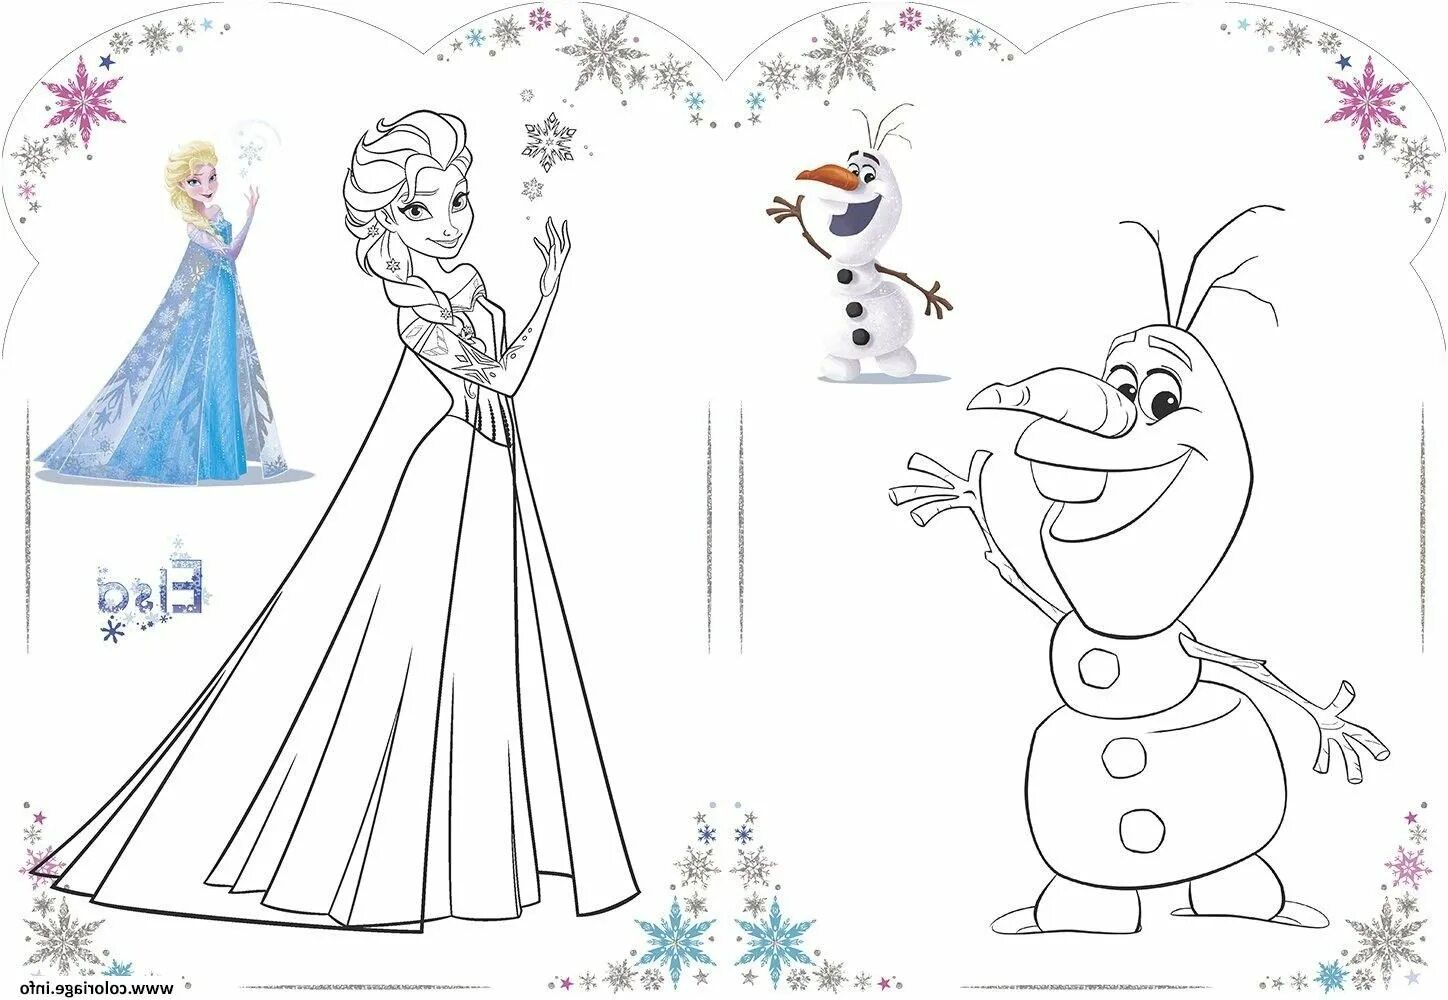 Elsa and olaf #3